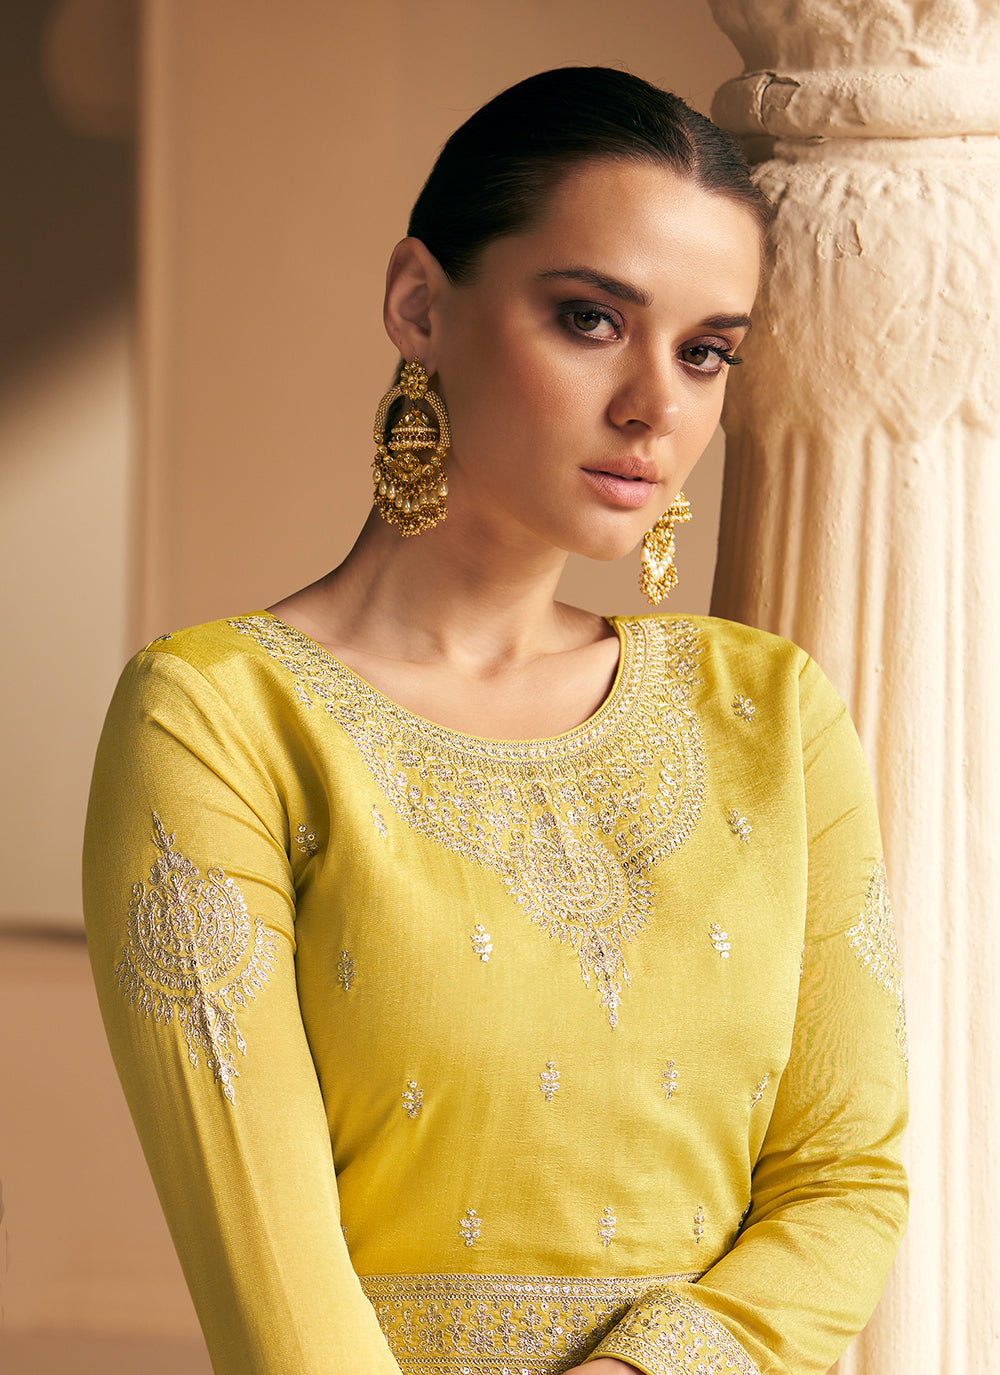 Silk Yellow Trendy Salwar Kameez